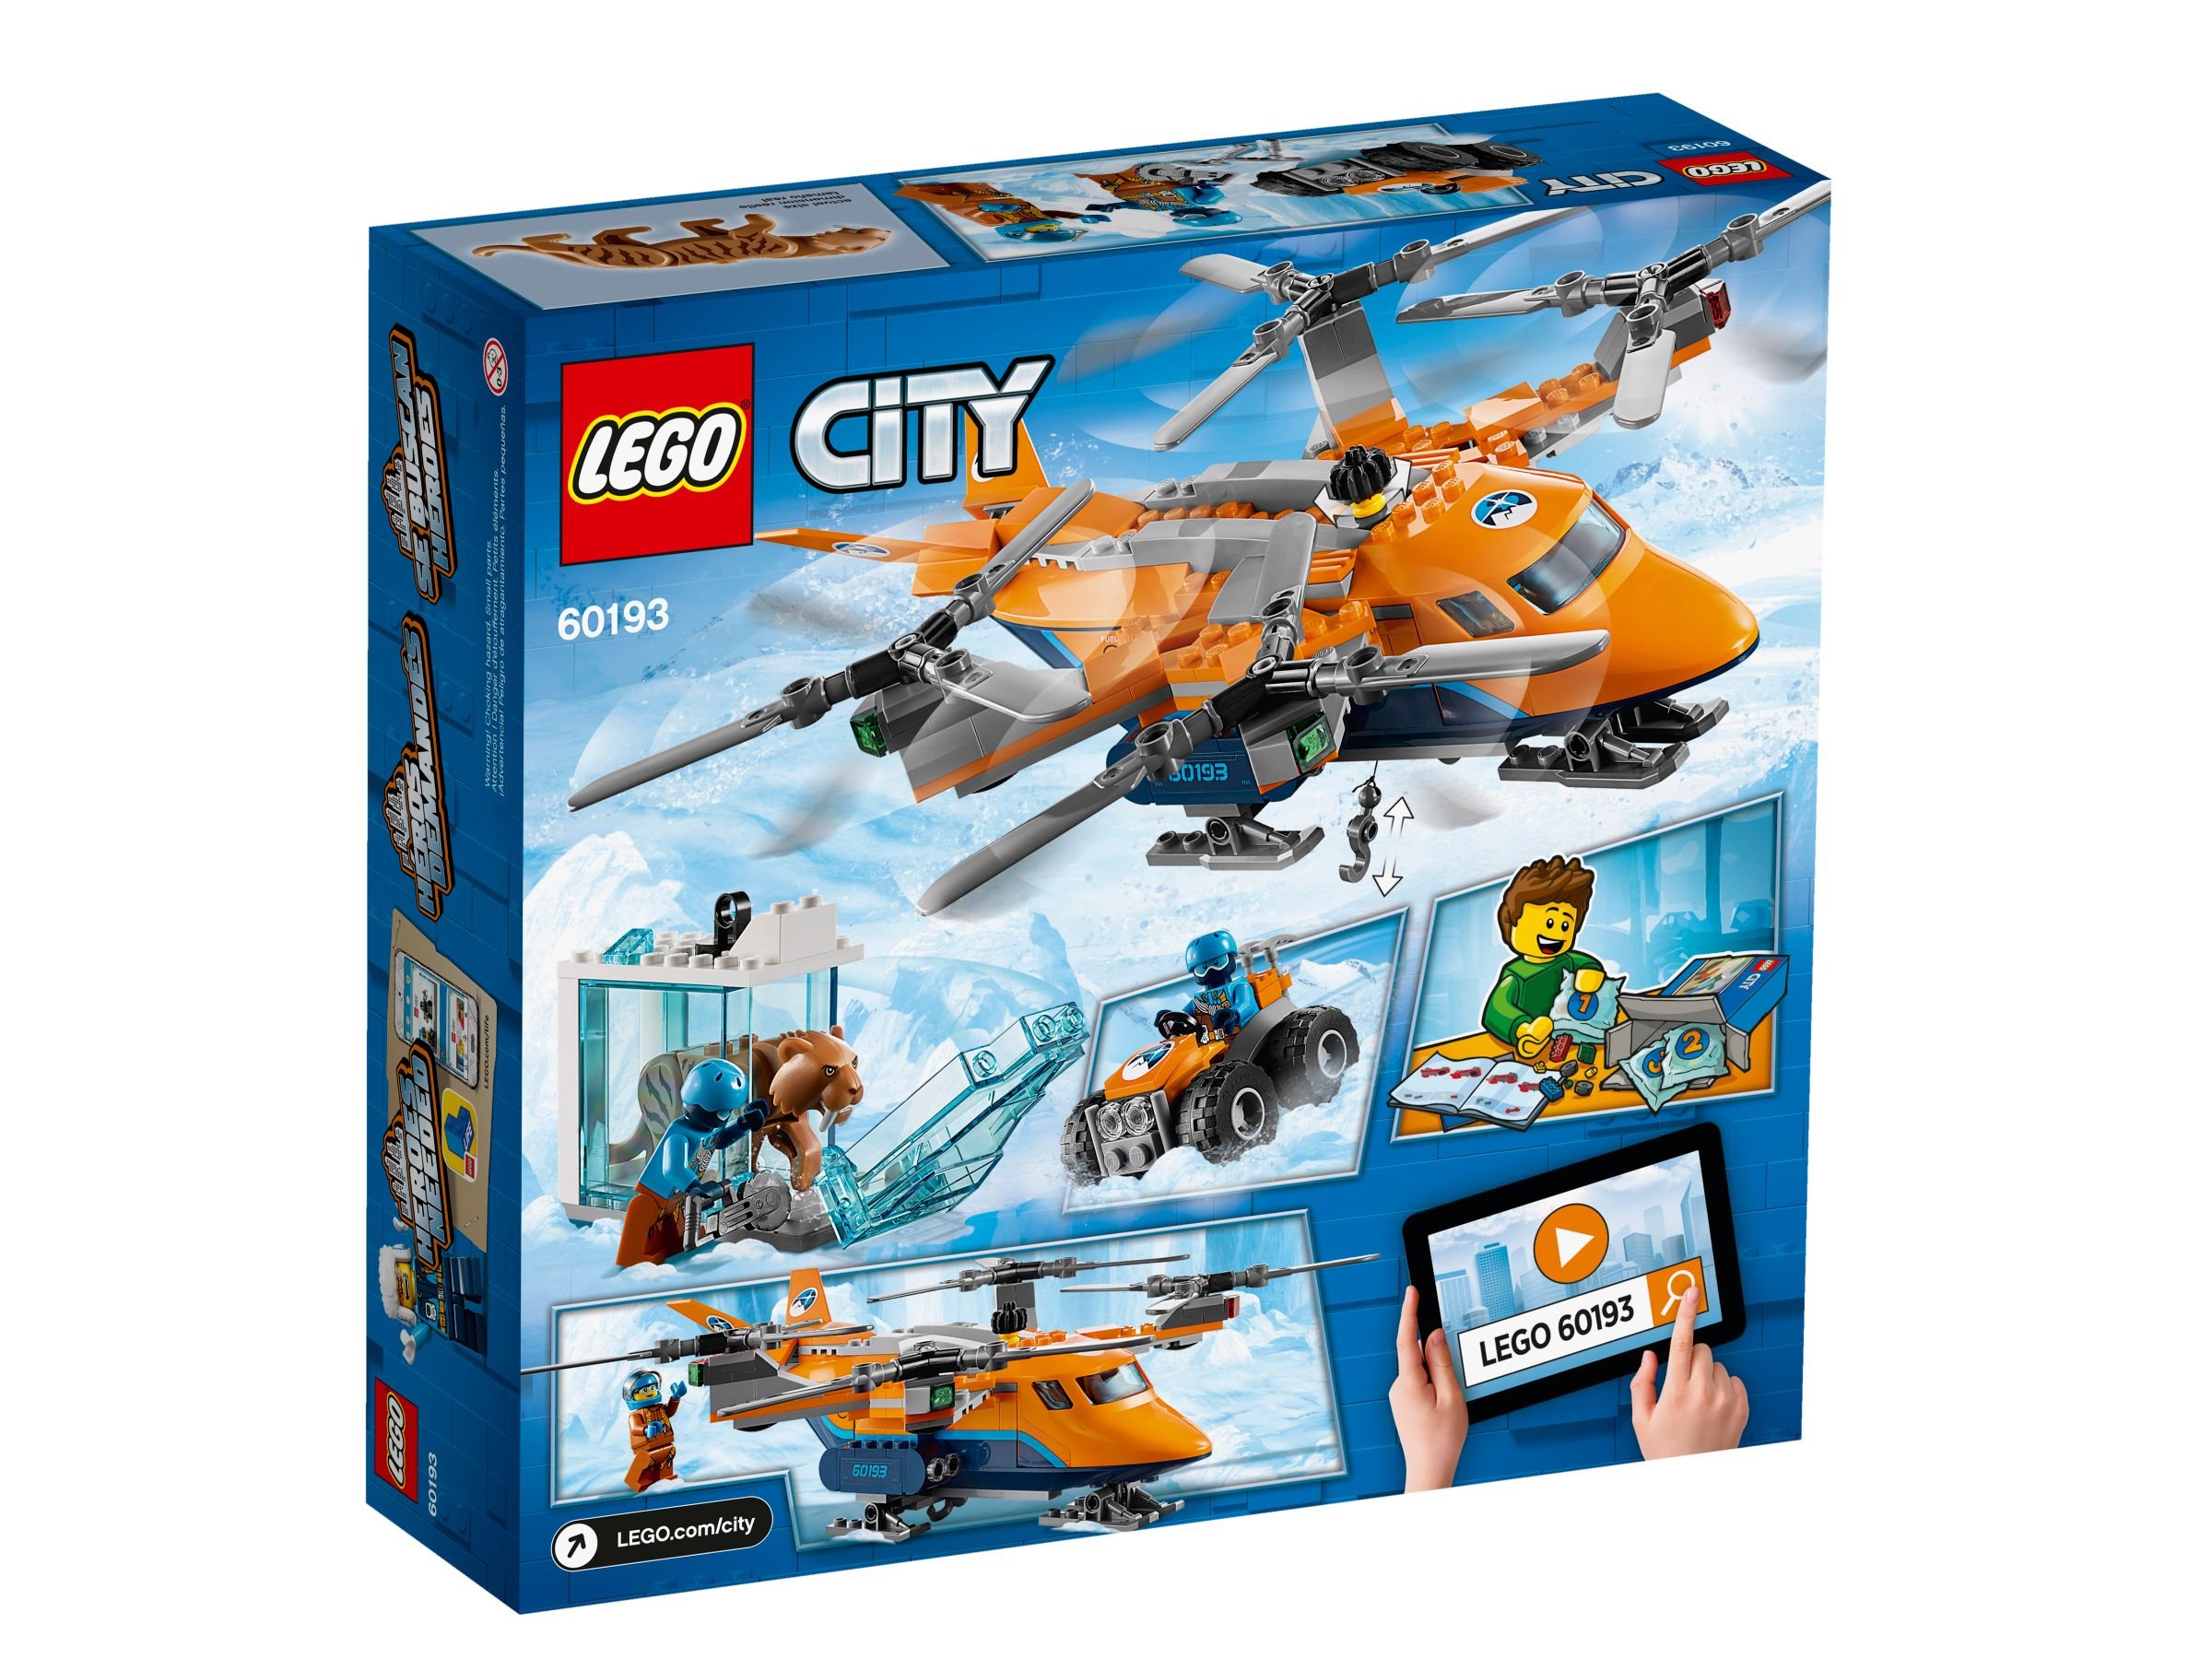 LEGO City 60193 Arktis-Frachtflugzeug LEGO_60193_alt4.jpg